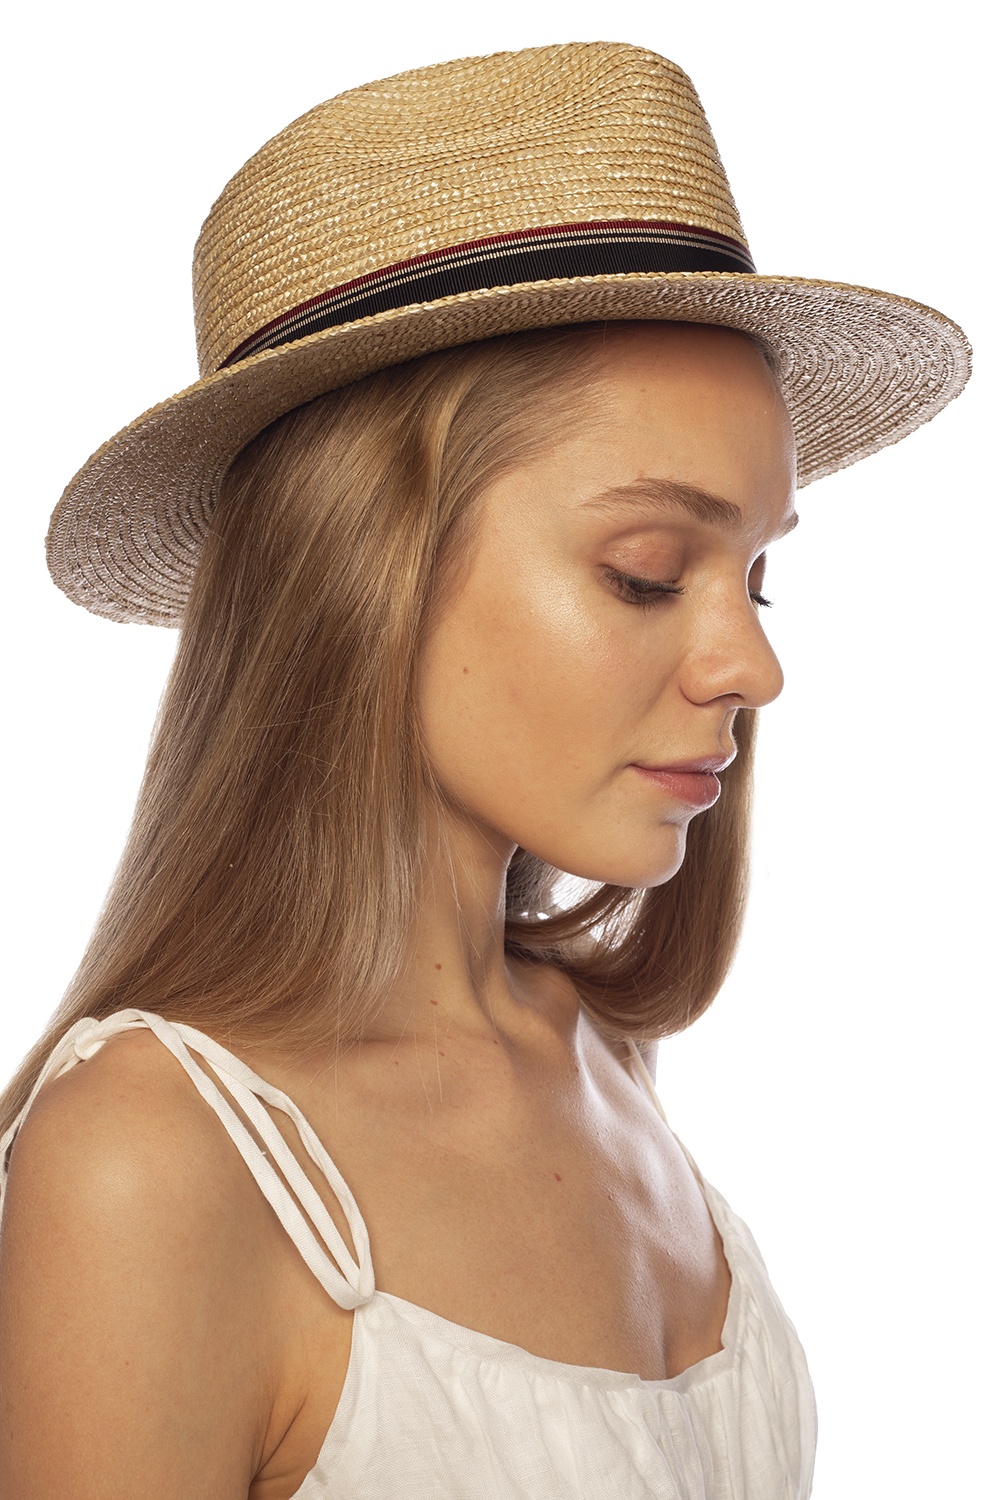 Saint Laurent Hats for Women, Online Sale up to 61% off